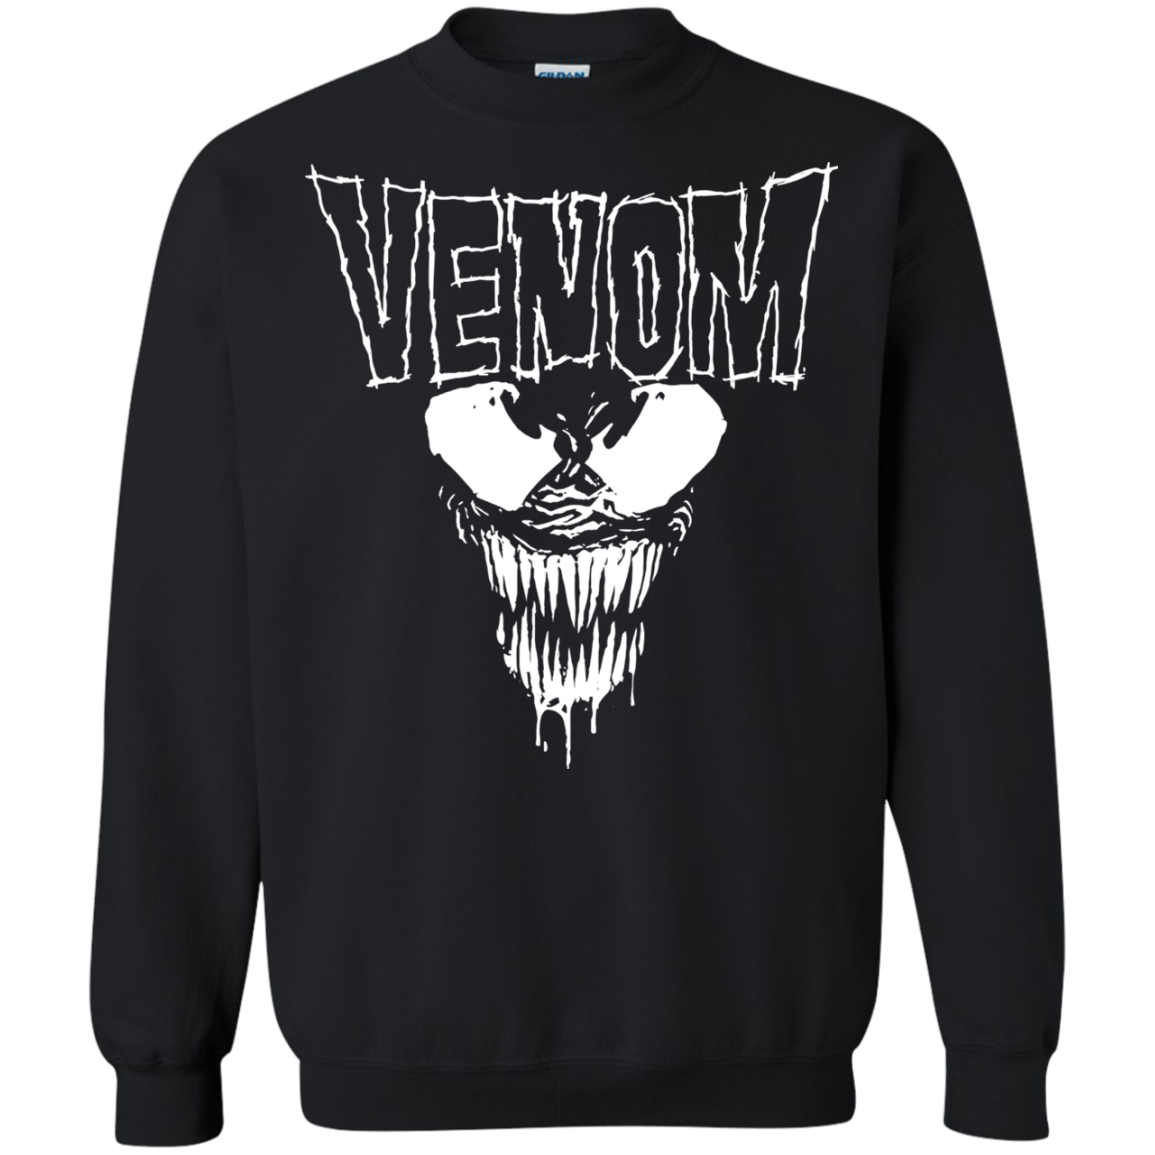 Venom Danzig Crewneck Sweatshirt